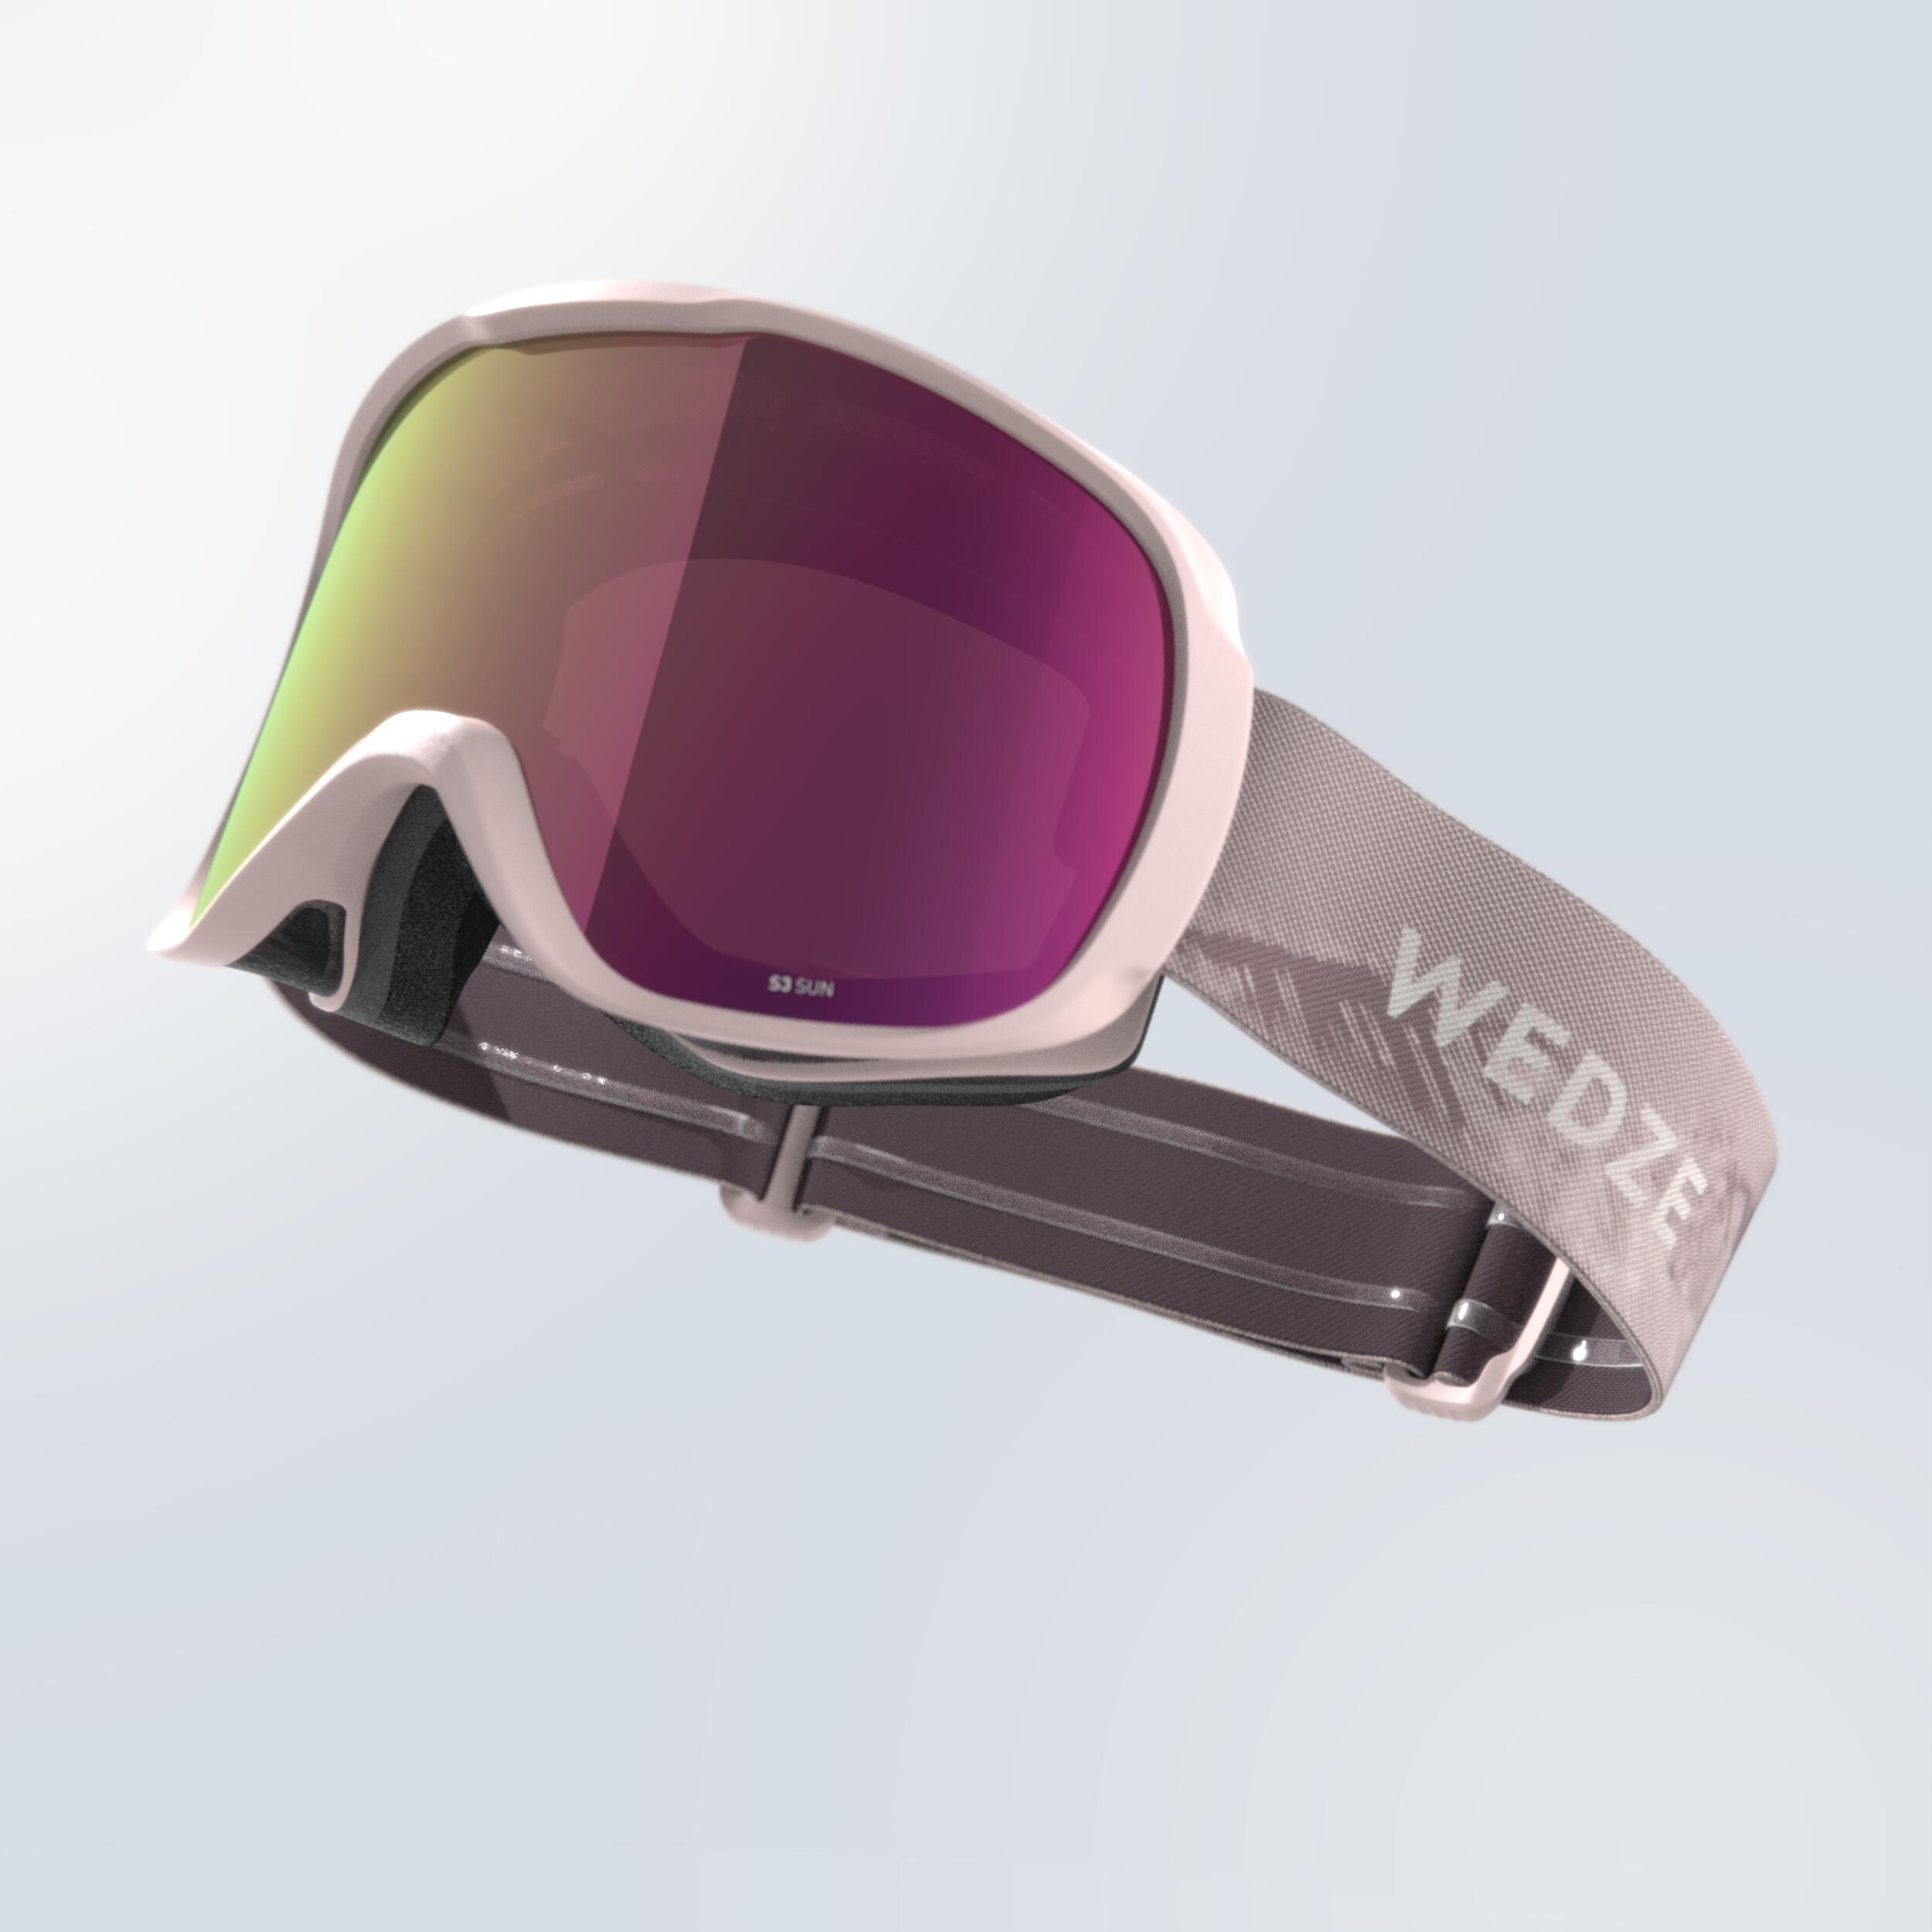 Ochelari schi/snowboard G 500 S3 Vreme Frumoasă Roz Copii/Adulți La Oferta Online decathlon imagine La Oferta Online